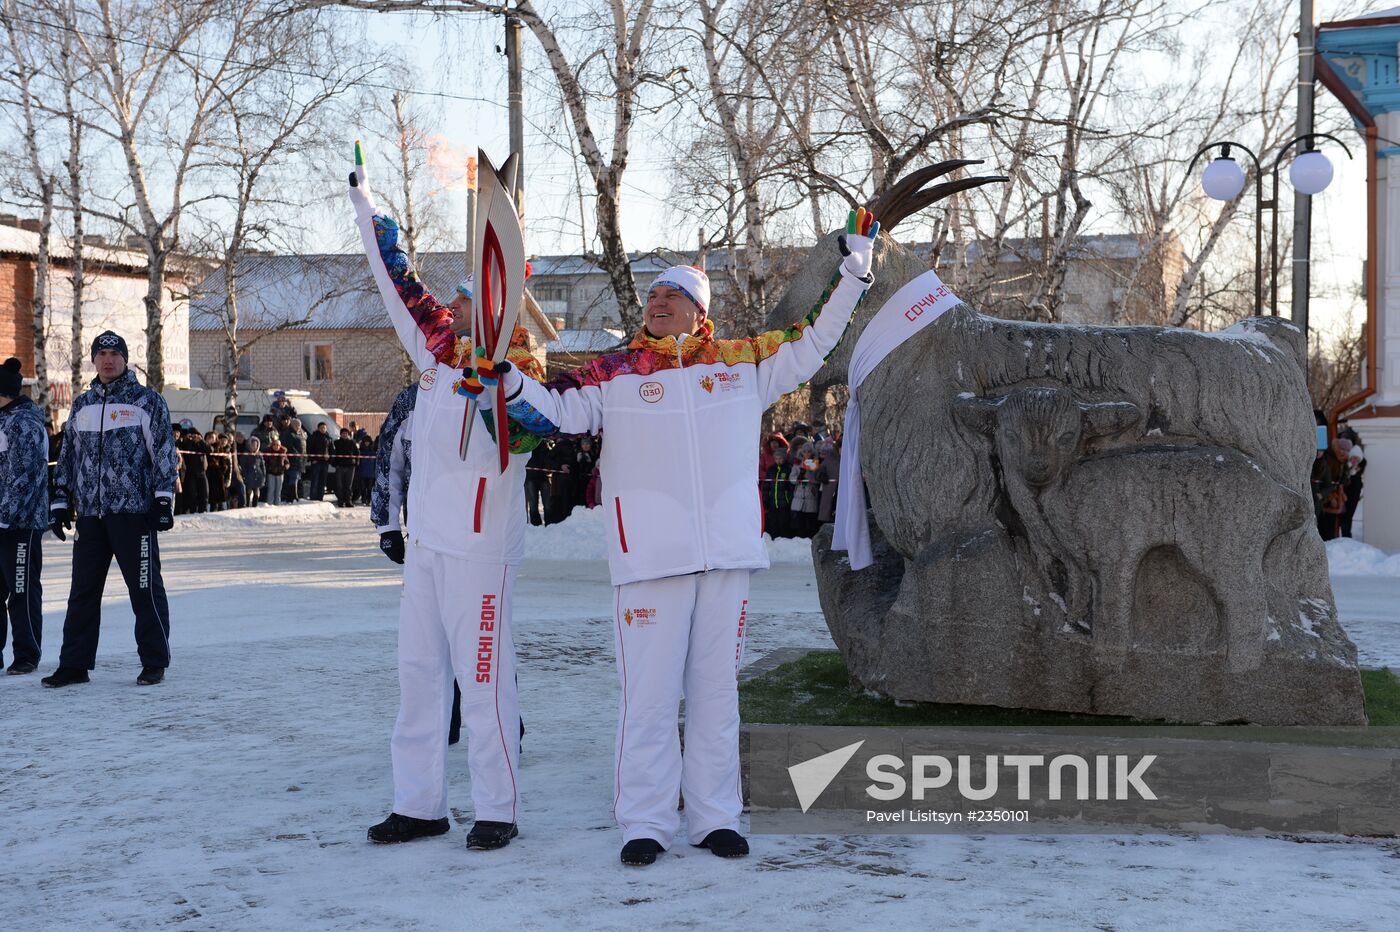 Sochi 2014 Olympic torch relay. Uryupinsk